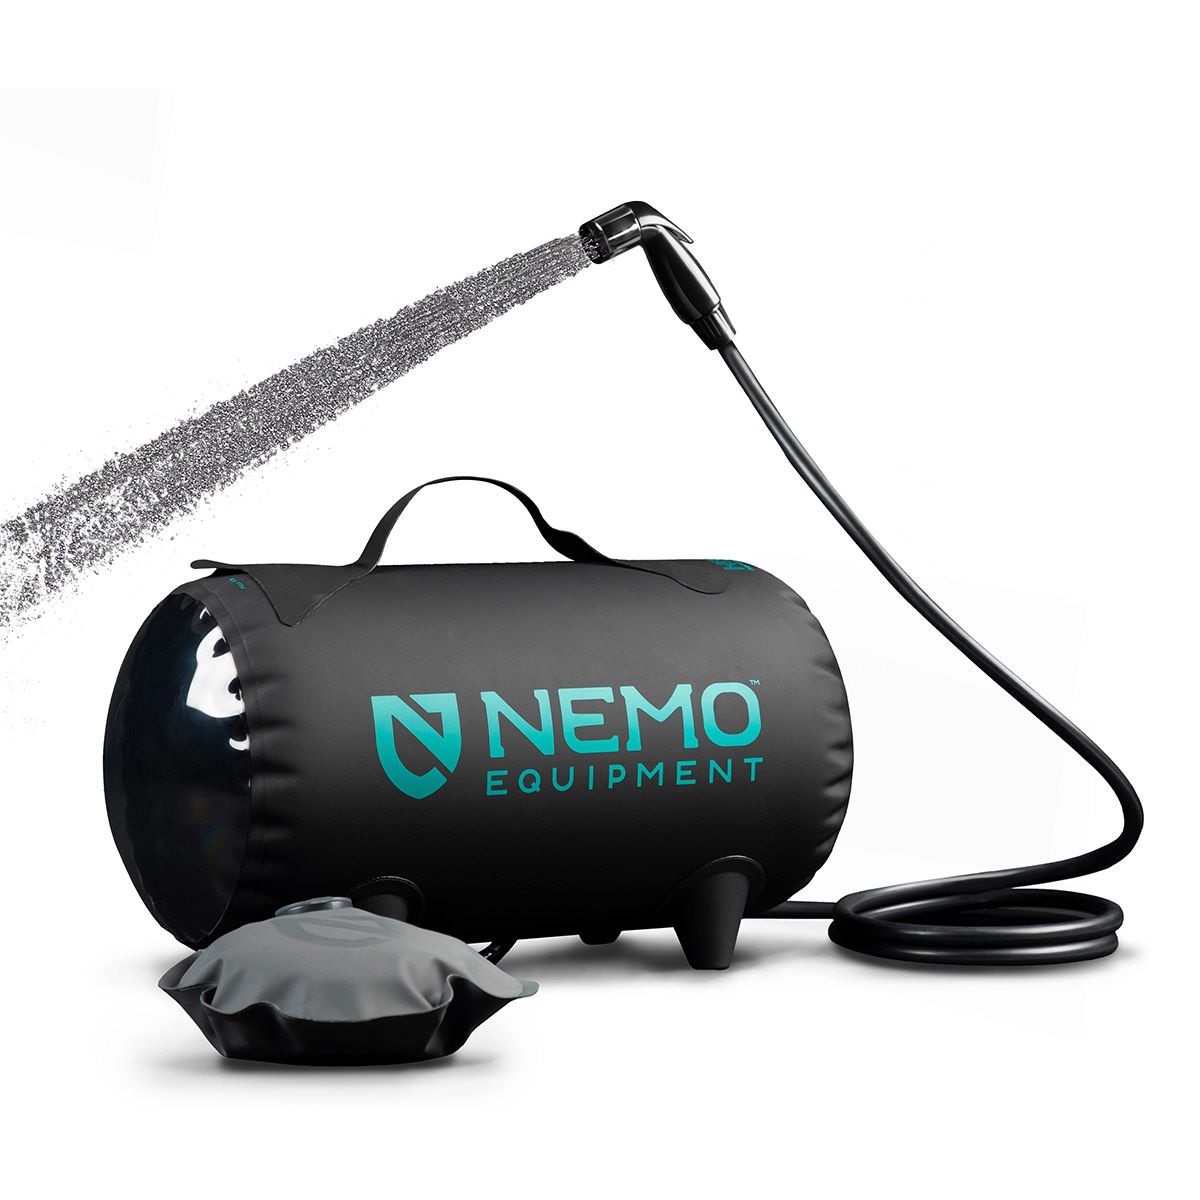 Nemo Helio portable high-pressure shower